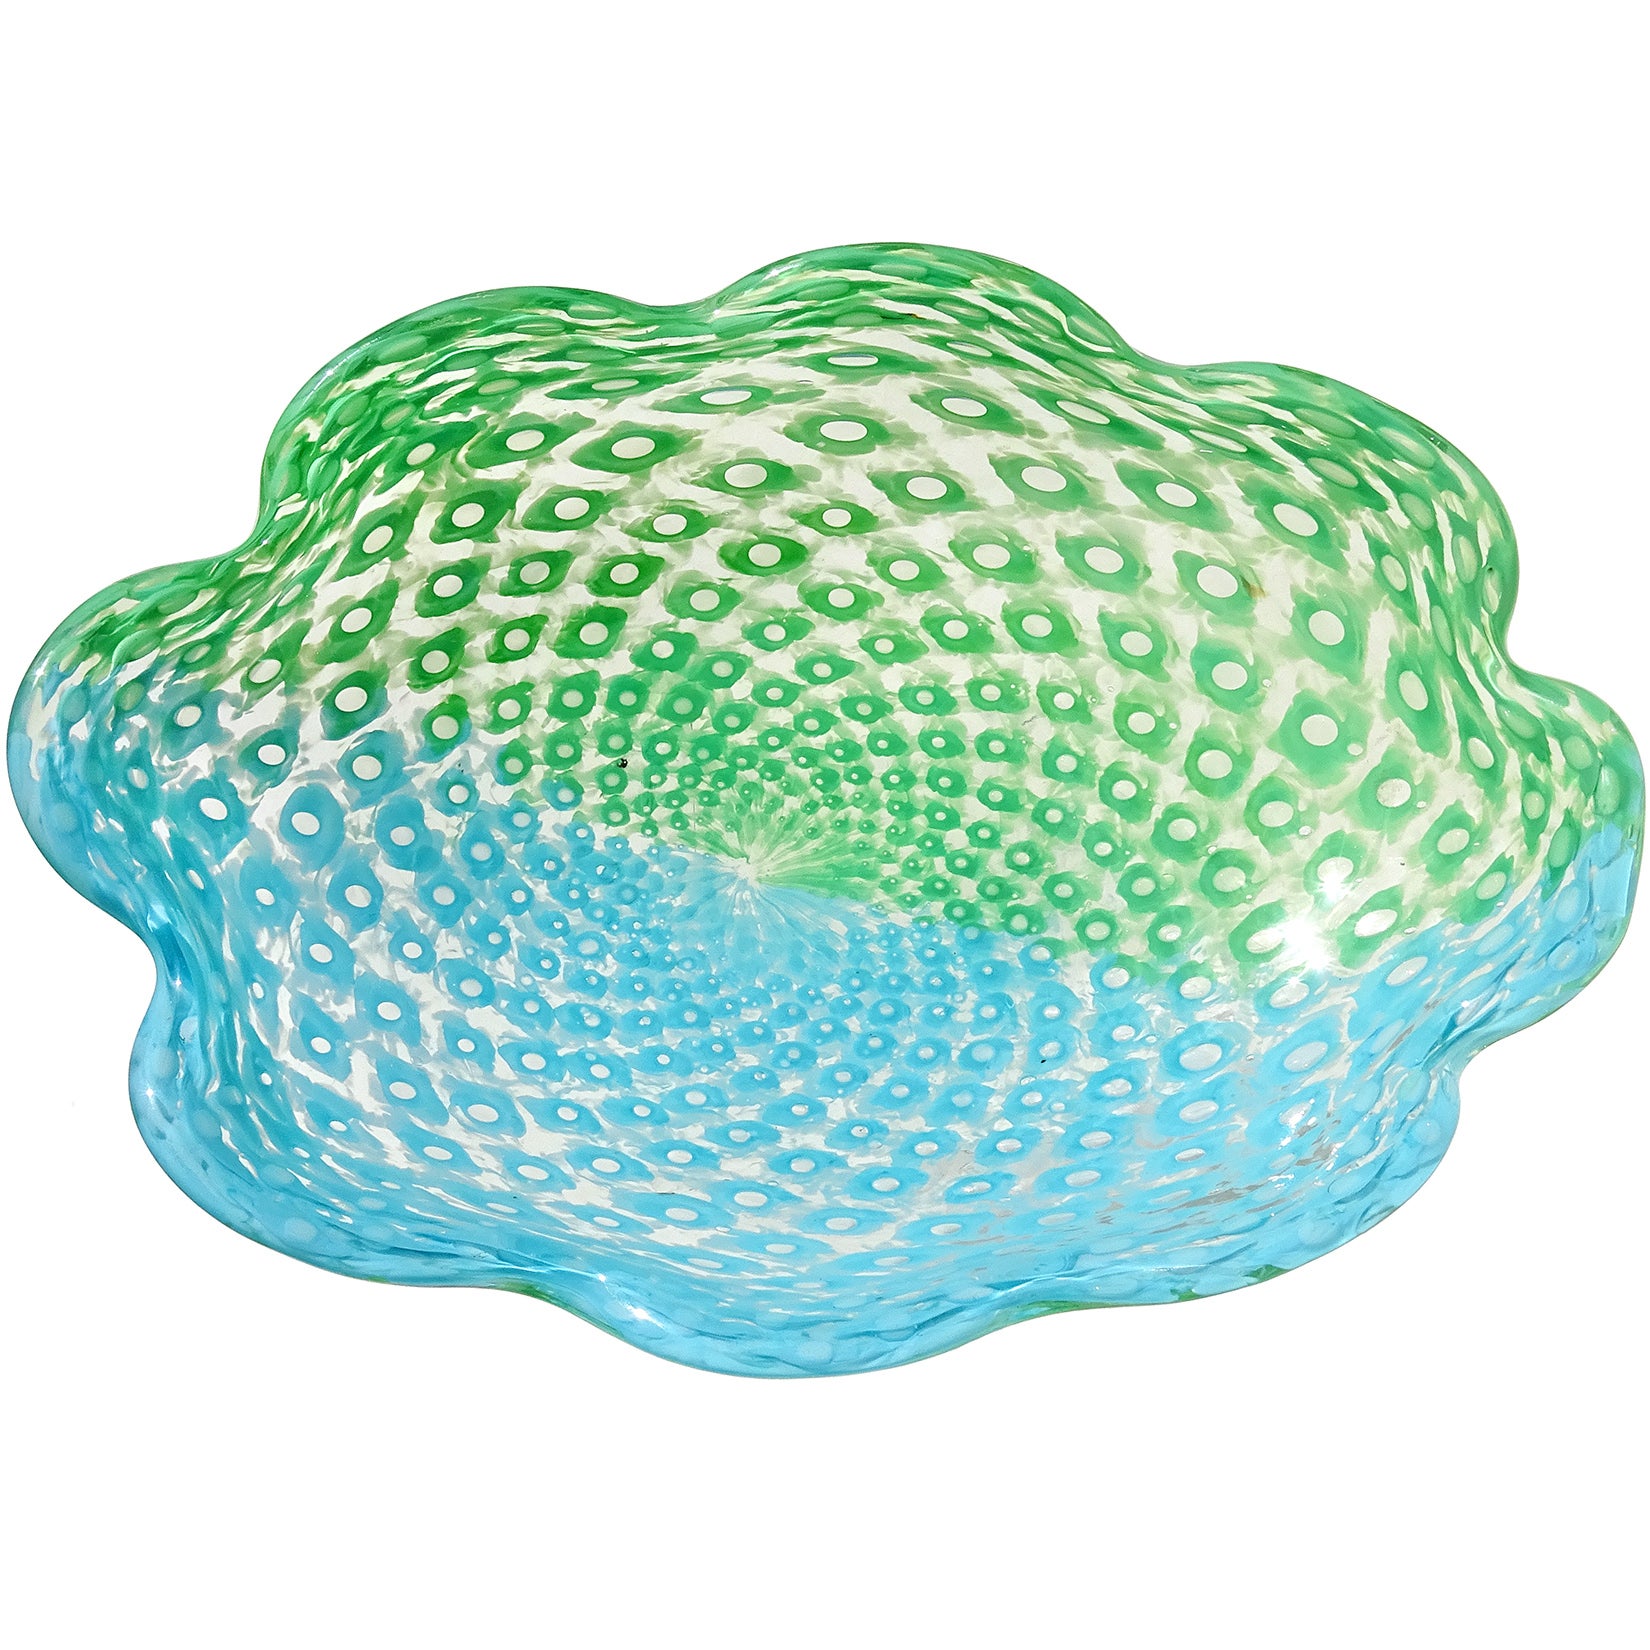 Fratelli Toso Murano Sky Blue Green Bubbles Italian Art Glass Centerpiece Bowl For Sale